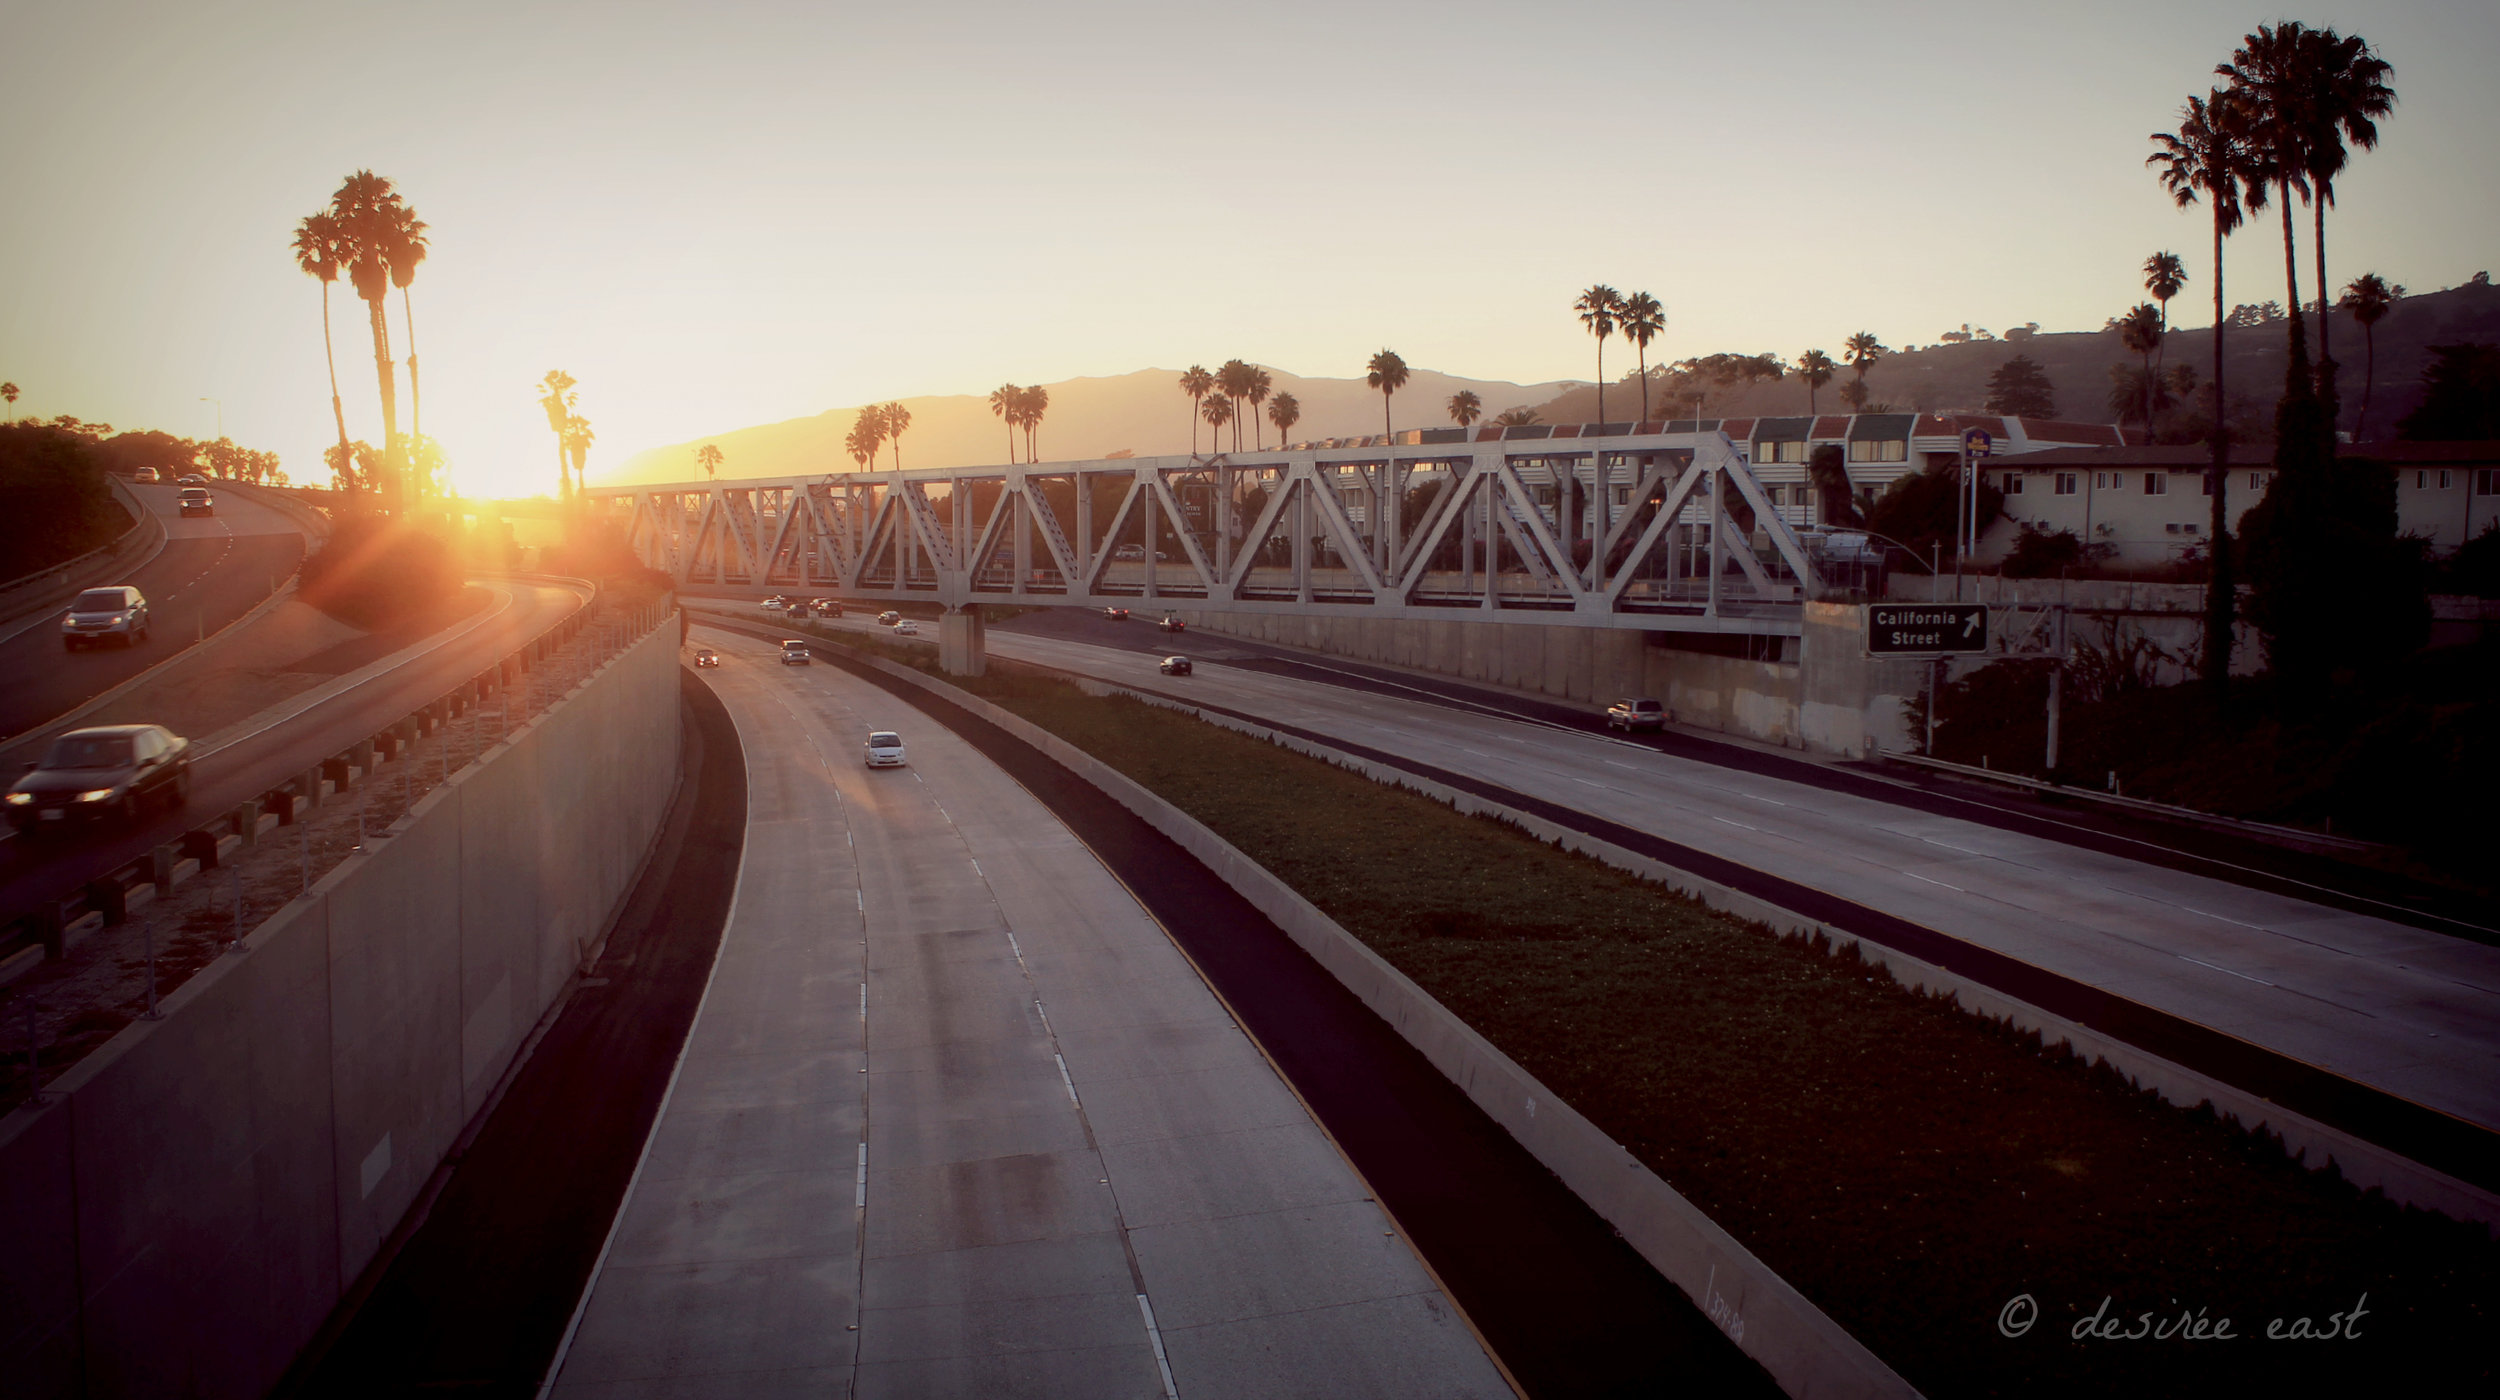 california street bridge train tracks. ventura, california. photo by desiree east